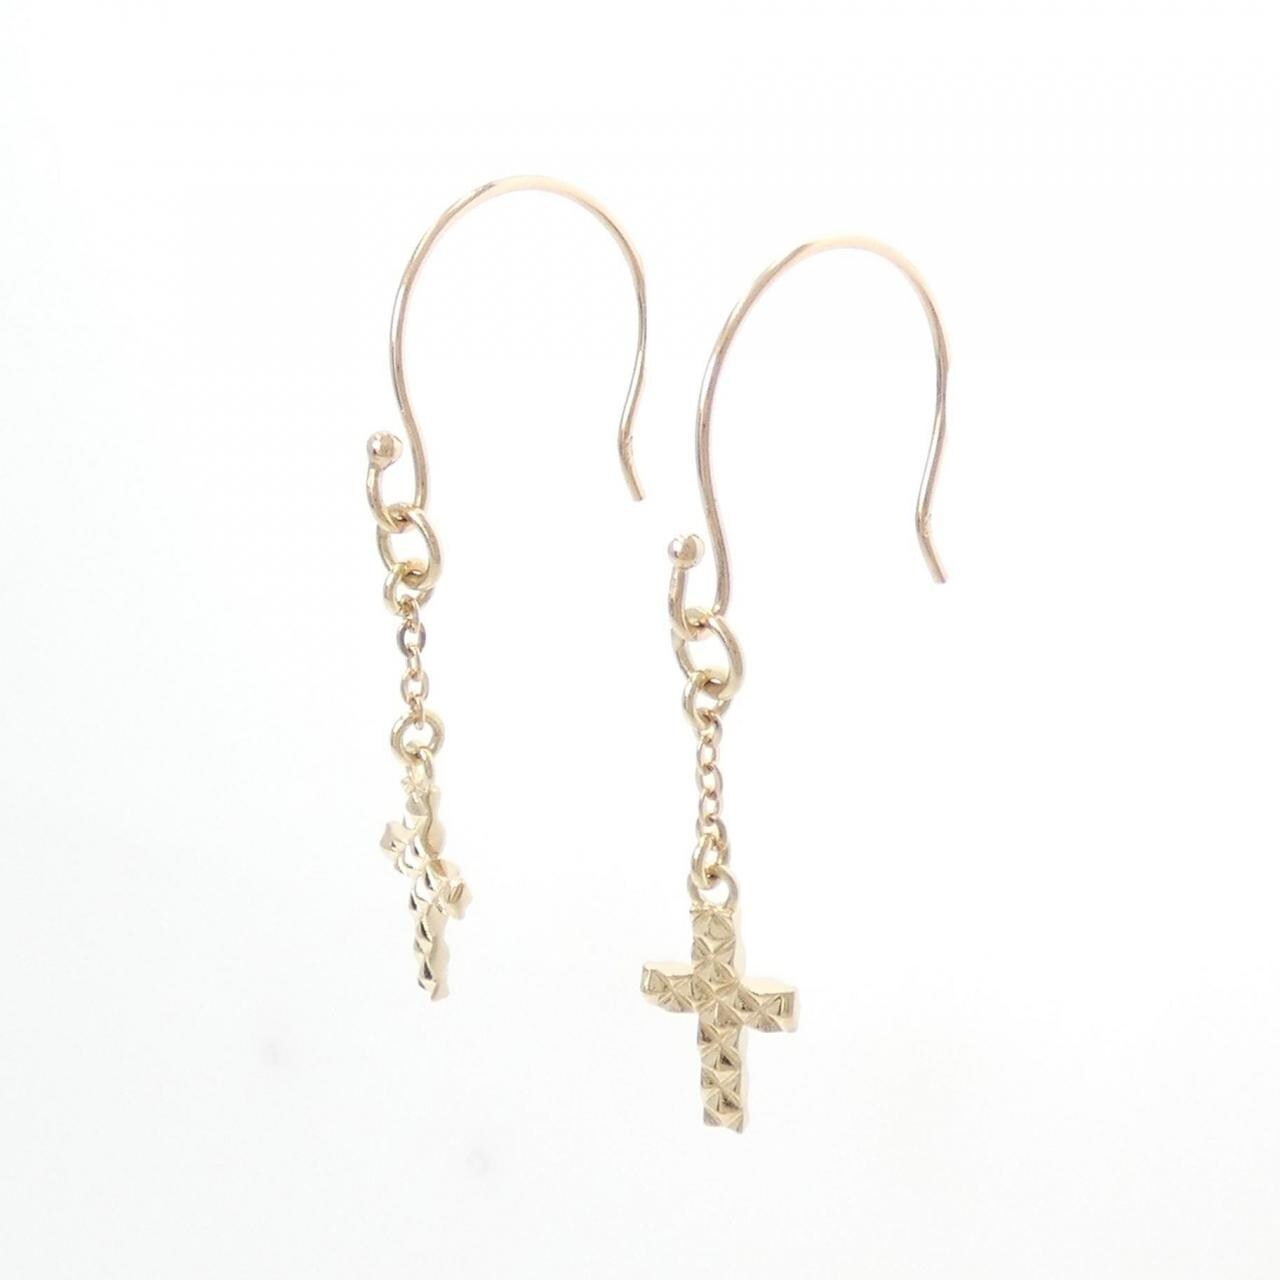 K10PG cross earrings